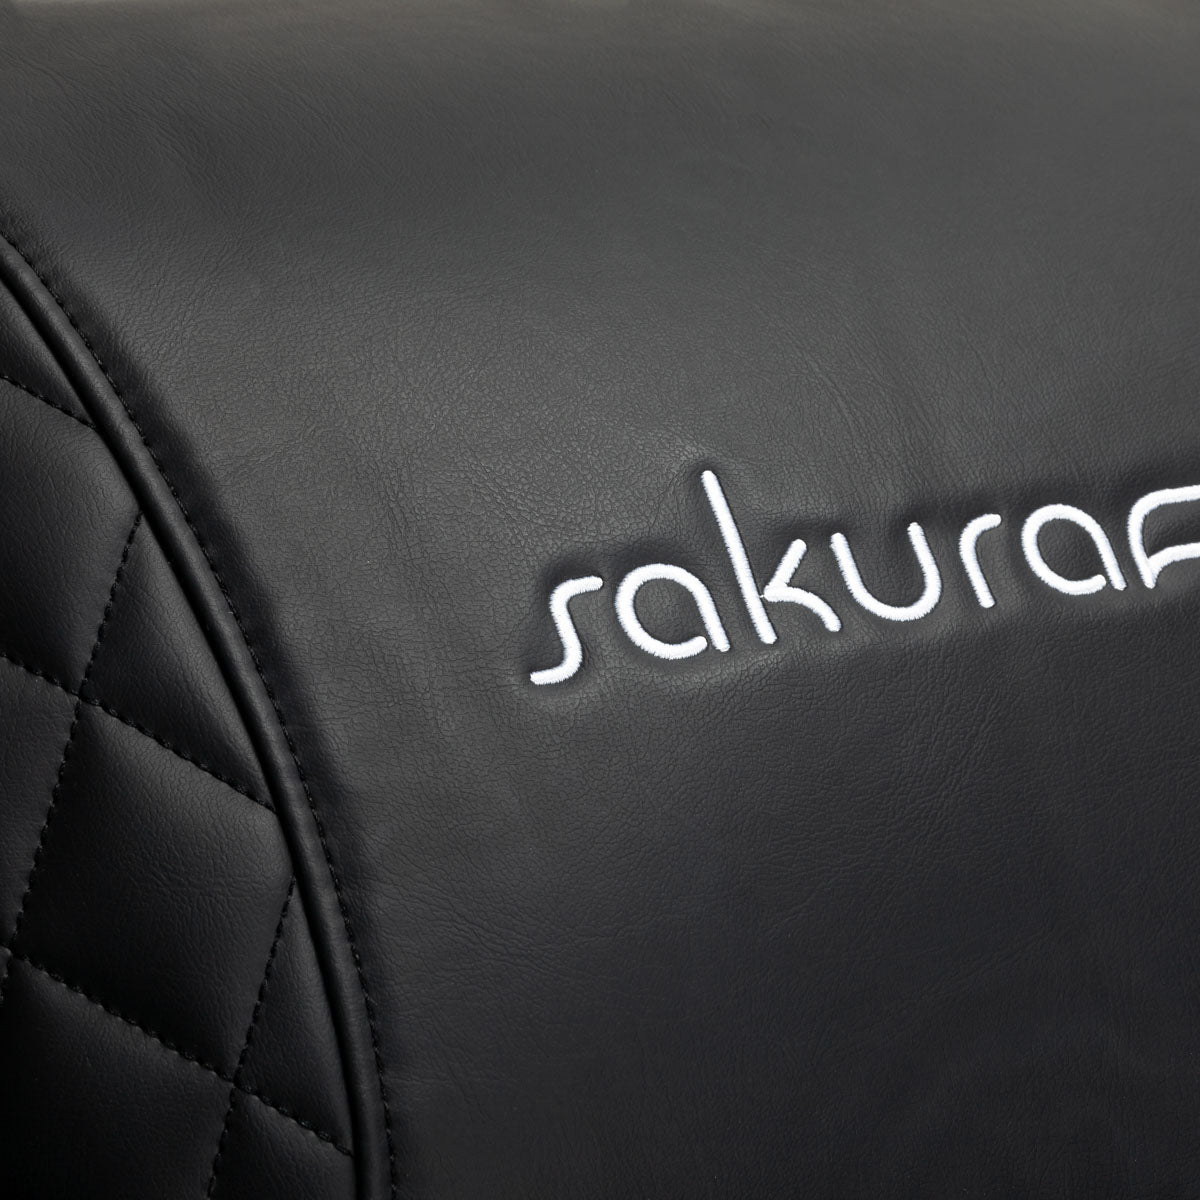 Sakura Massage Chair Standard 801 Black